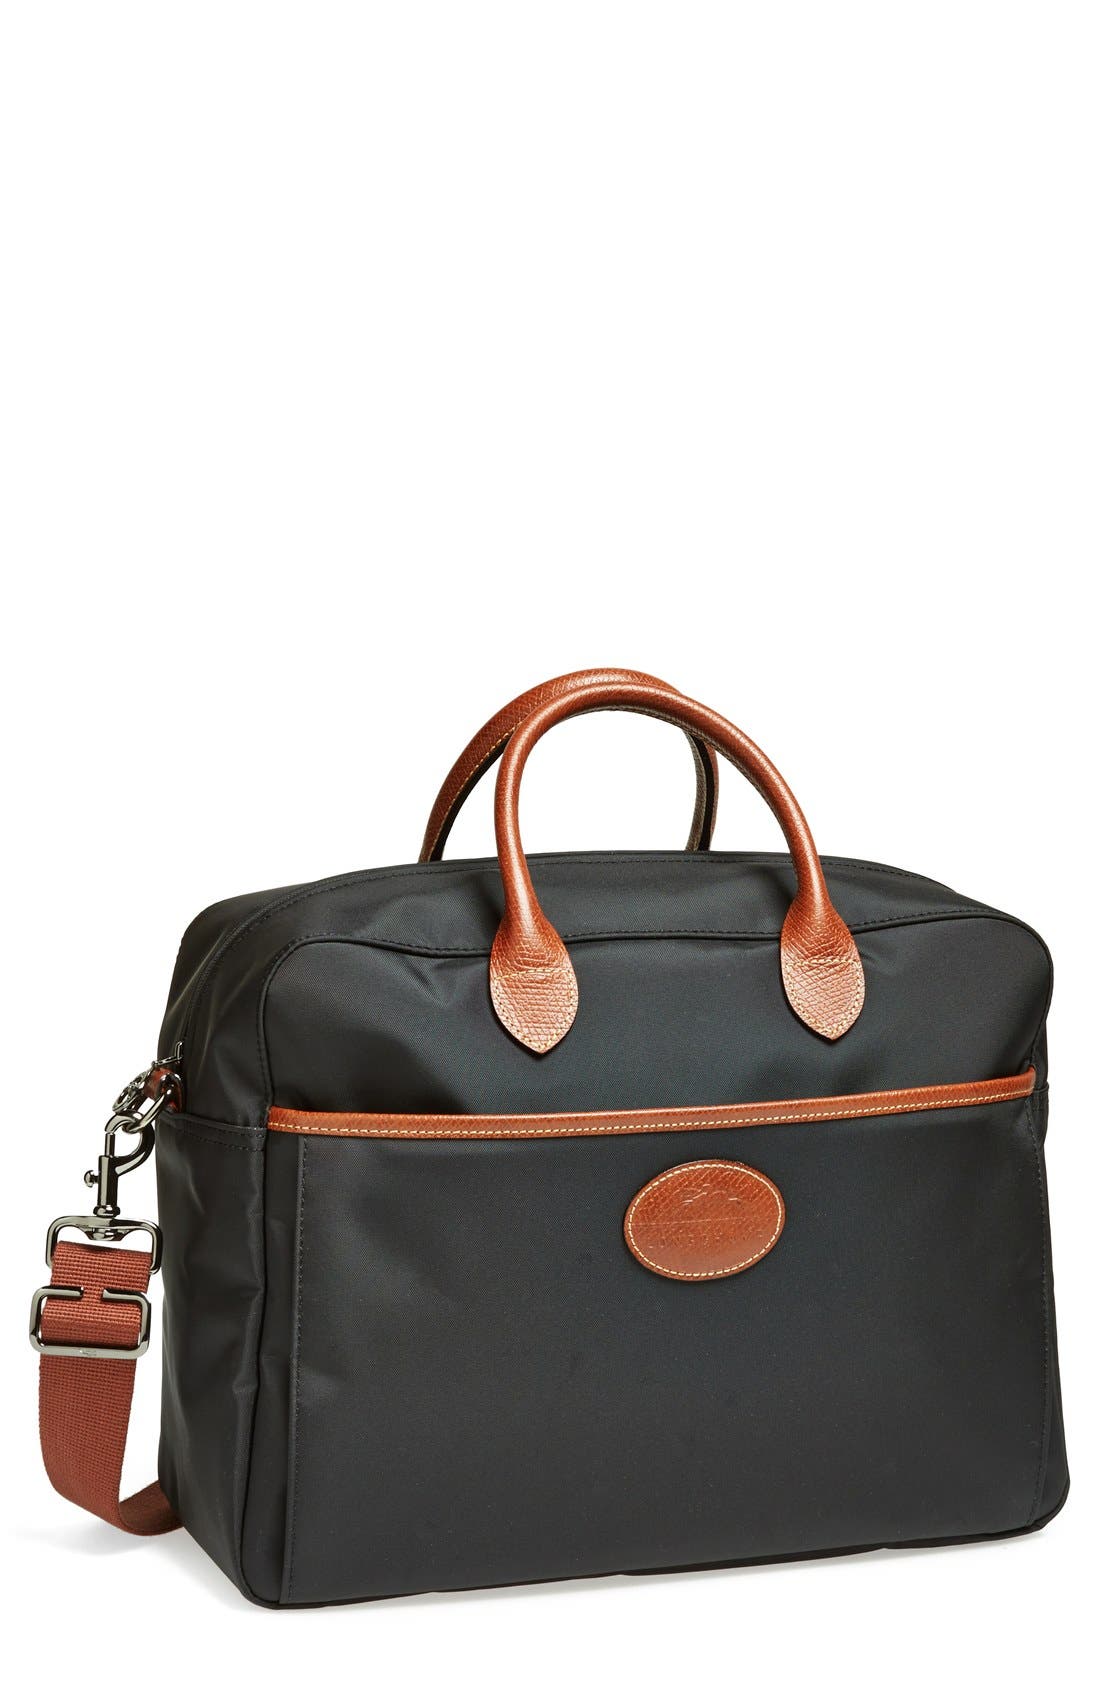 longchamp nylon travel bag